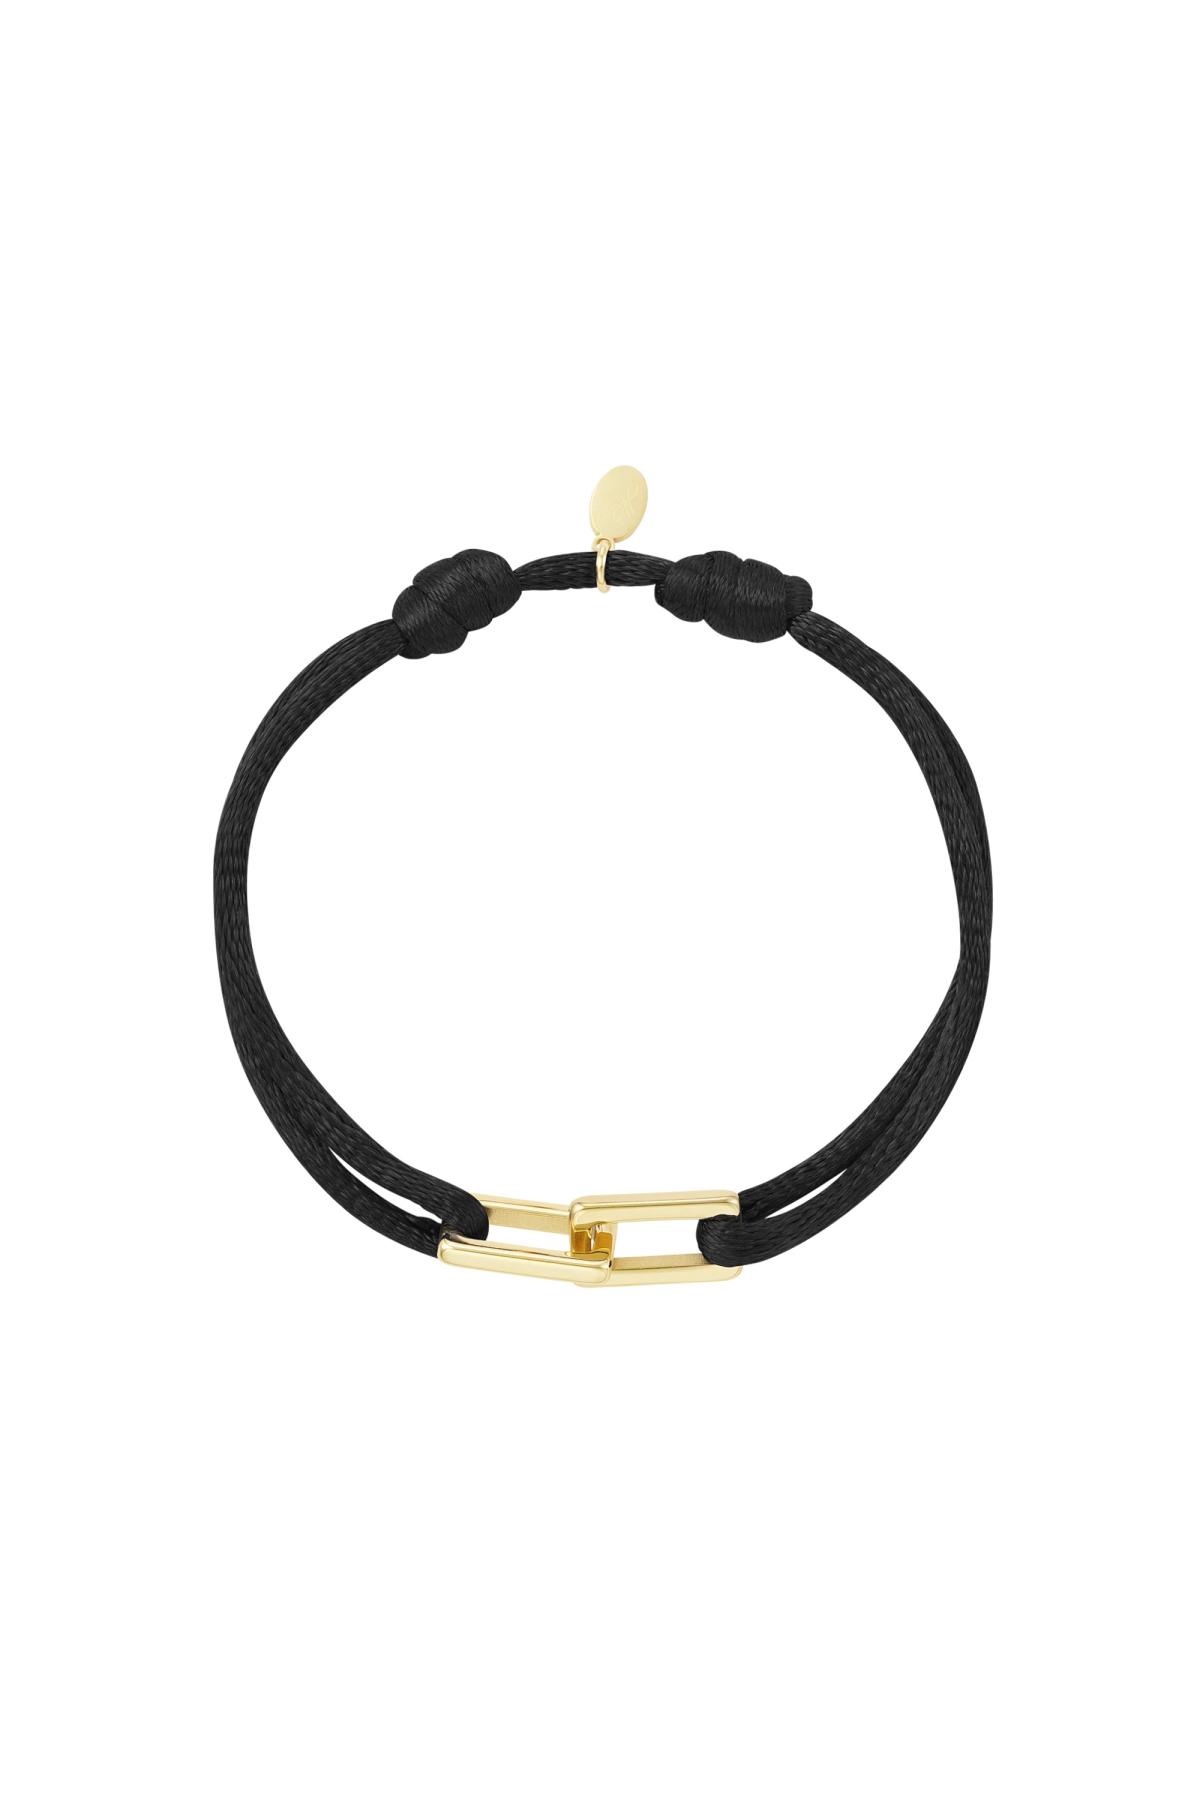 Fabric bracelet link Black &amp; Gold Stainless Steel